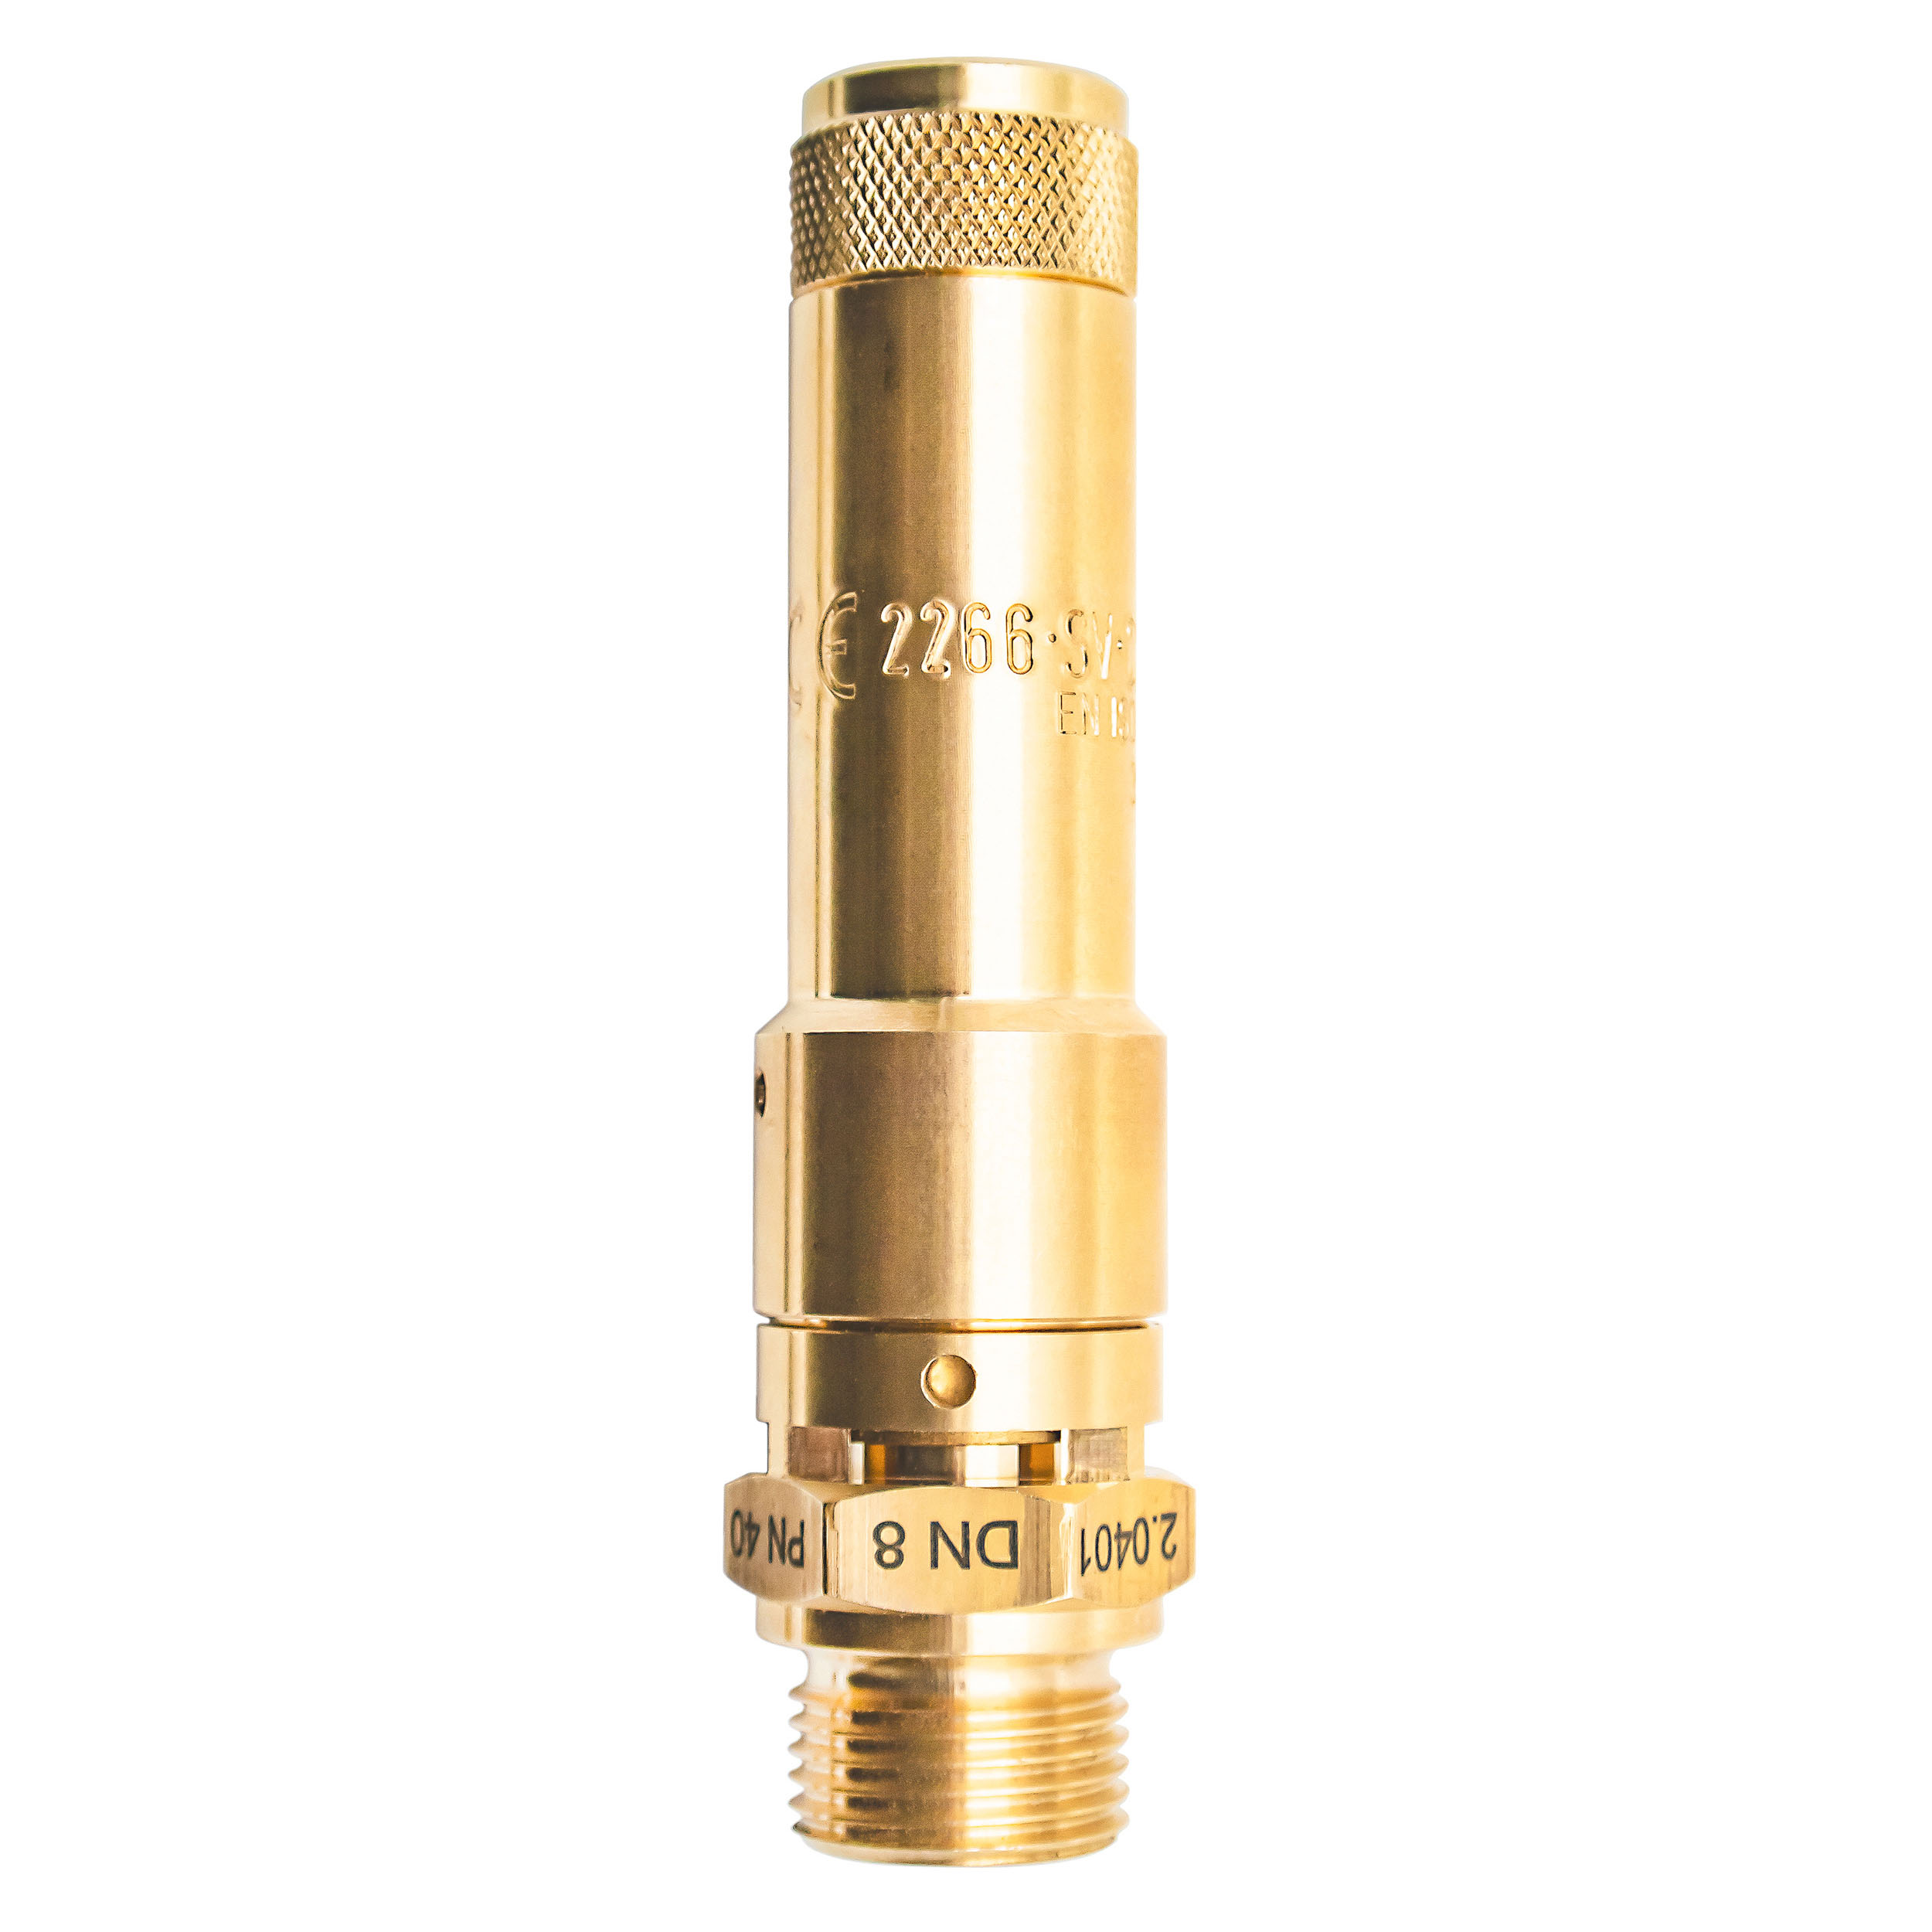 Component-tested safety valve DN 8, G½, pressure: 3.1-5 bar